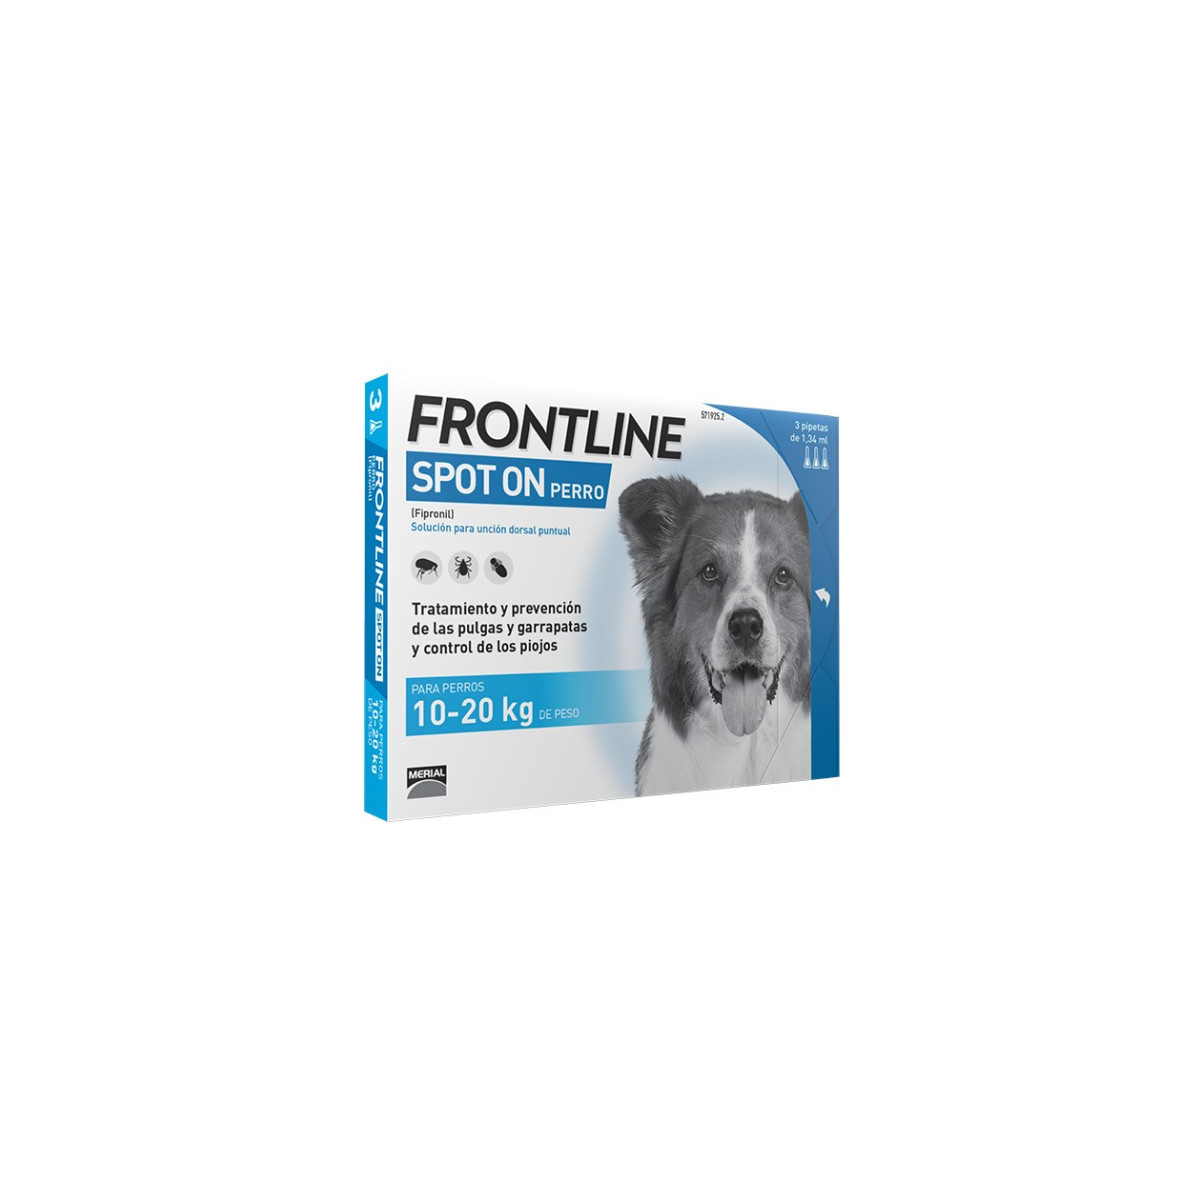 Frontline Spot On perros 10-20 kilos